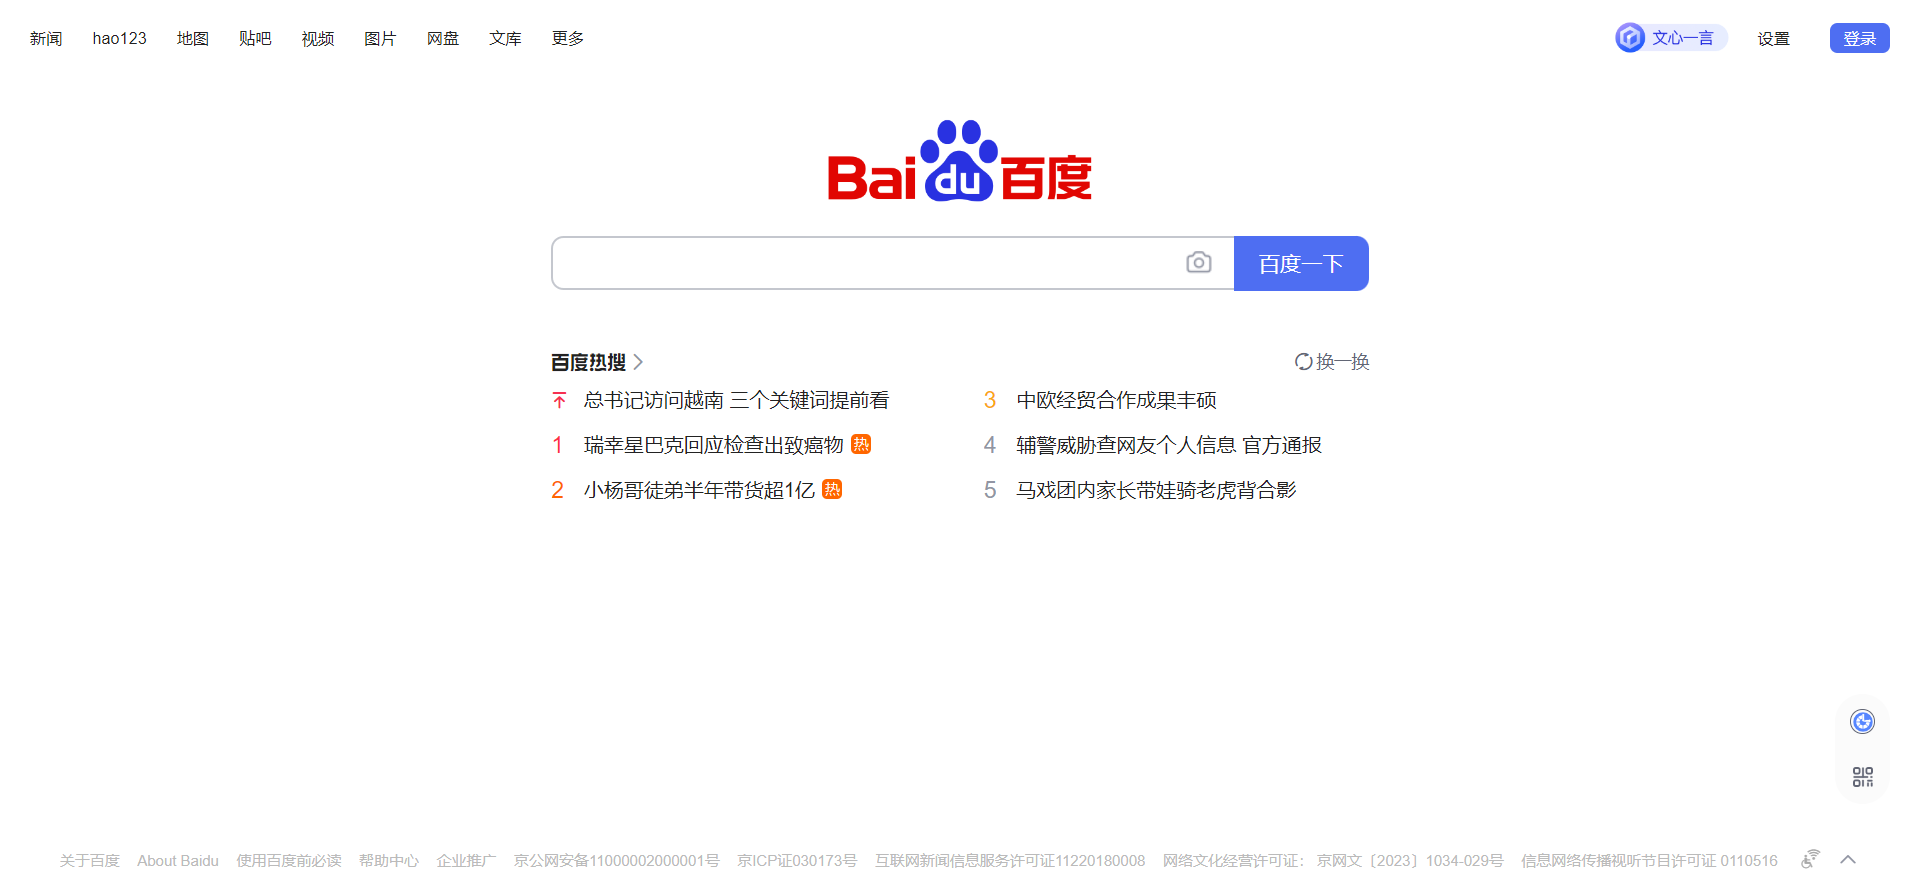 Screenshot from Baidu.com